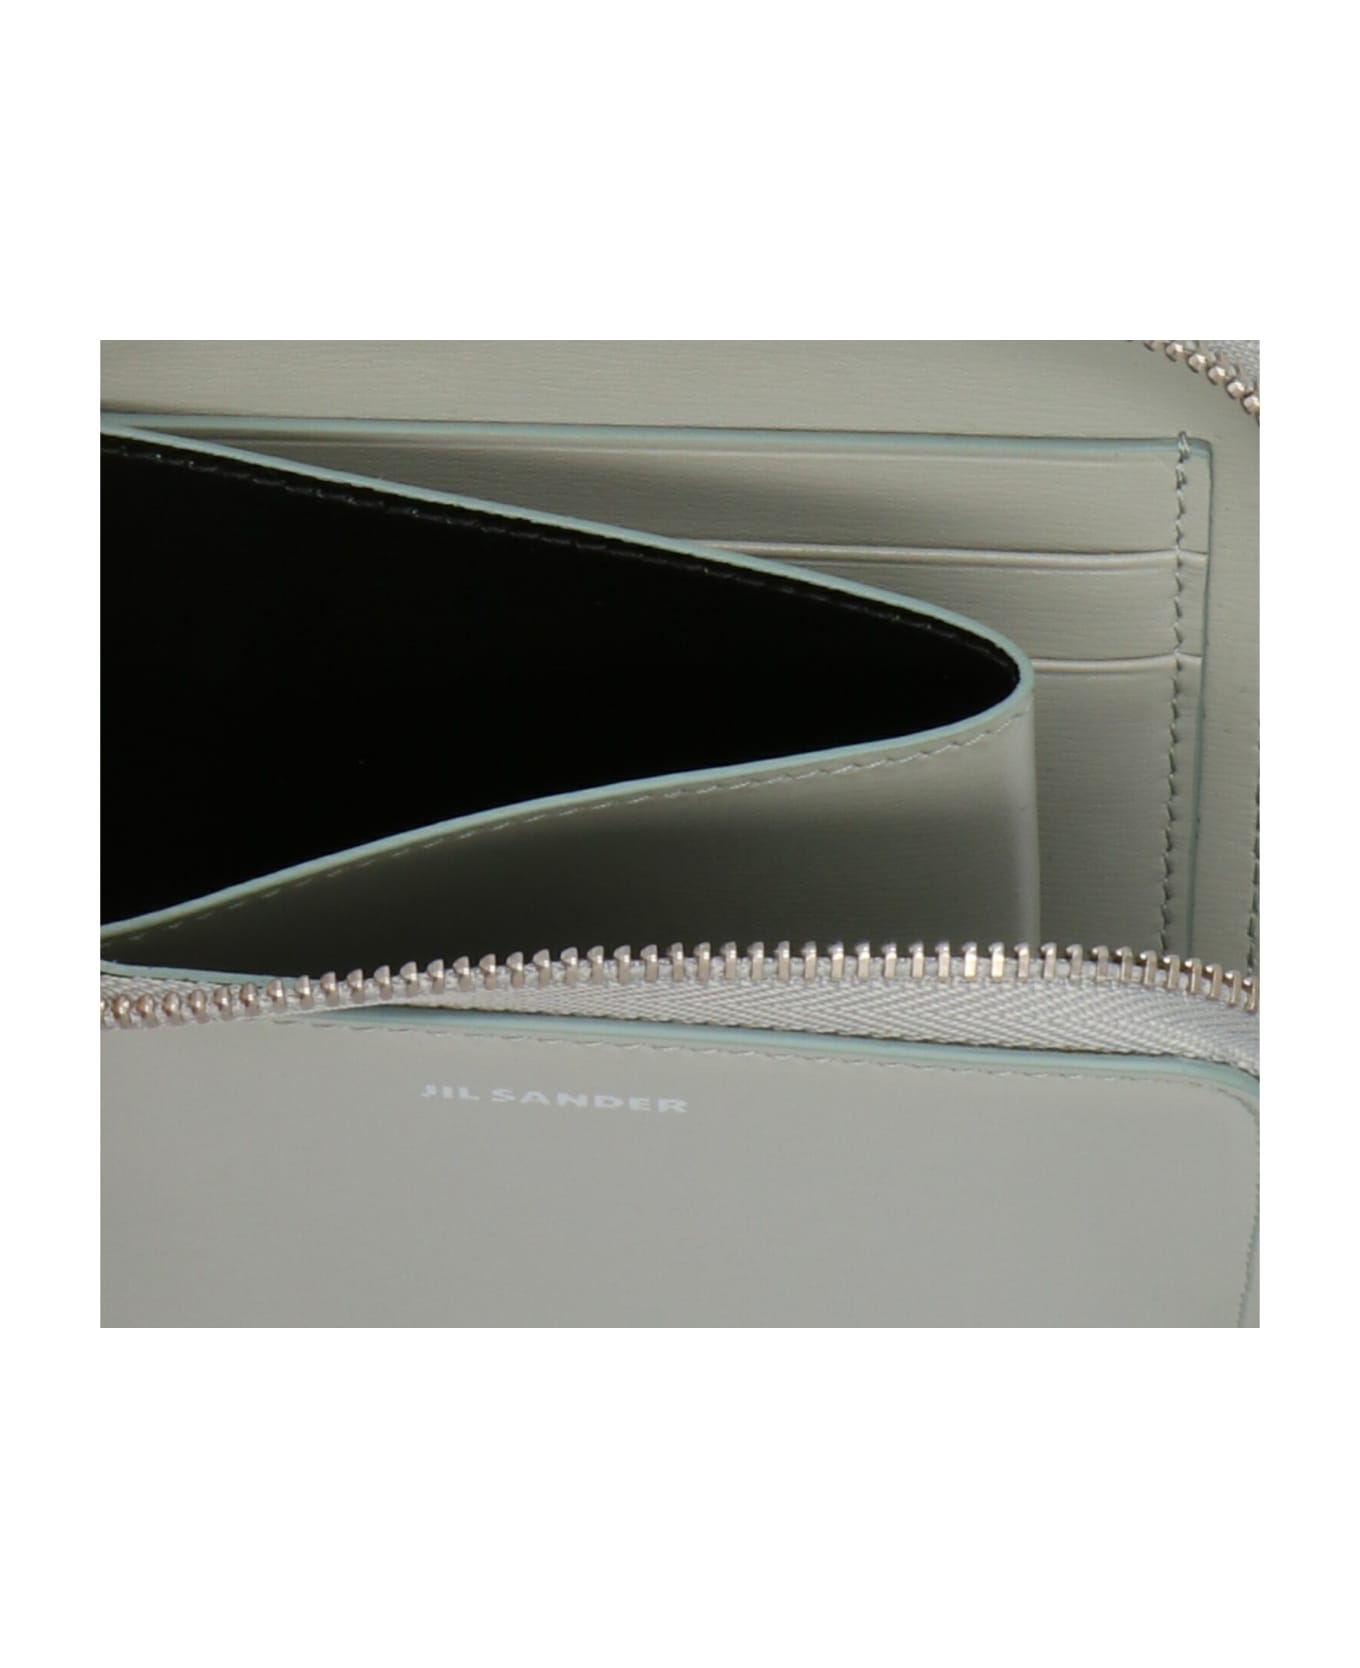 Jil Sander Logo Leather Wallet - Gray 財布